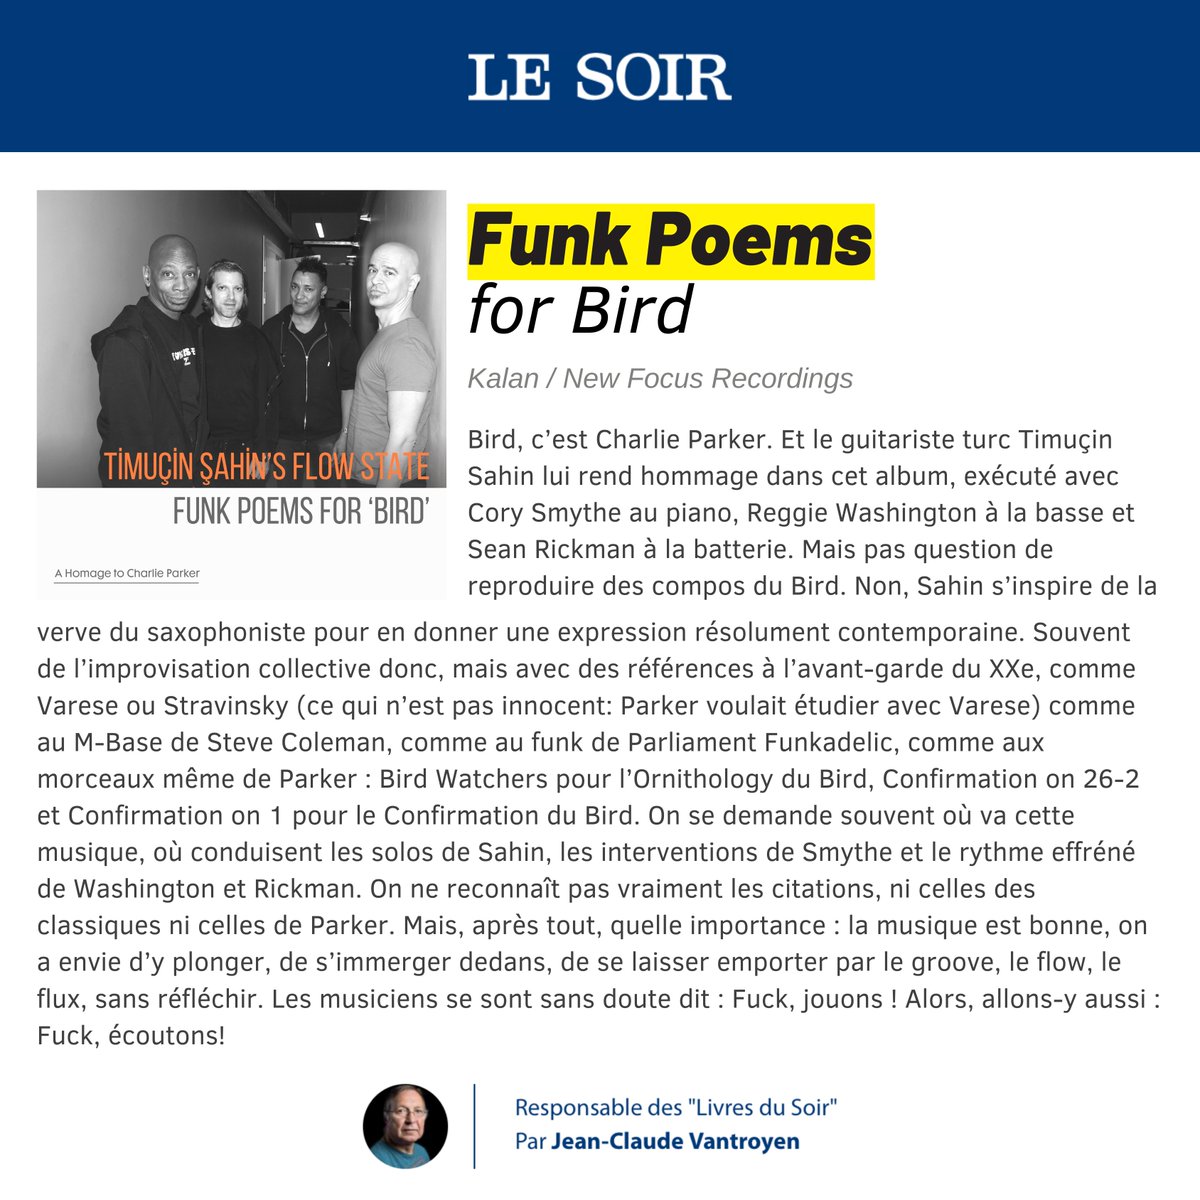 Funk Poems for 'Bird' reviewed in Belgium's national press @lesoir 

@Kalan_Muzik @NewFocusLabel @JammincolorS @reggbass @seanrickman2 @CharlieParkerKC